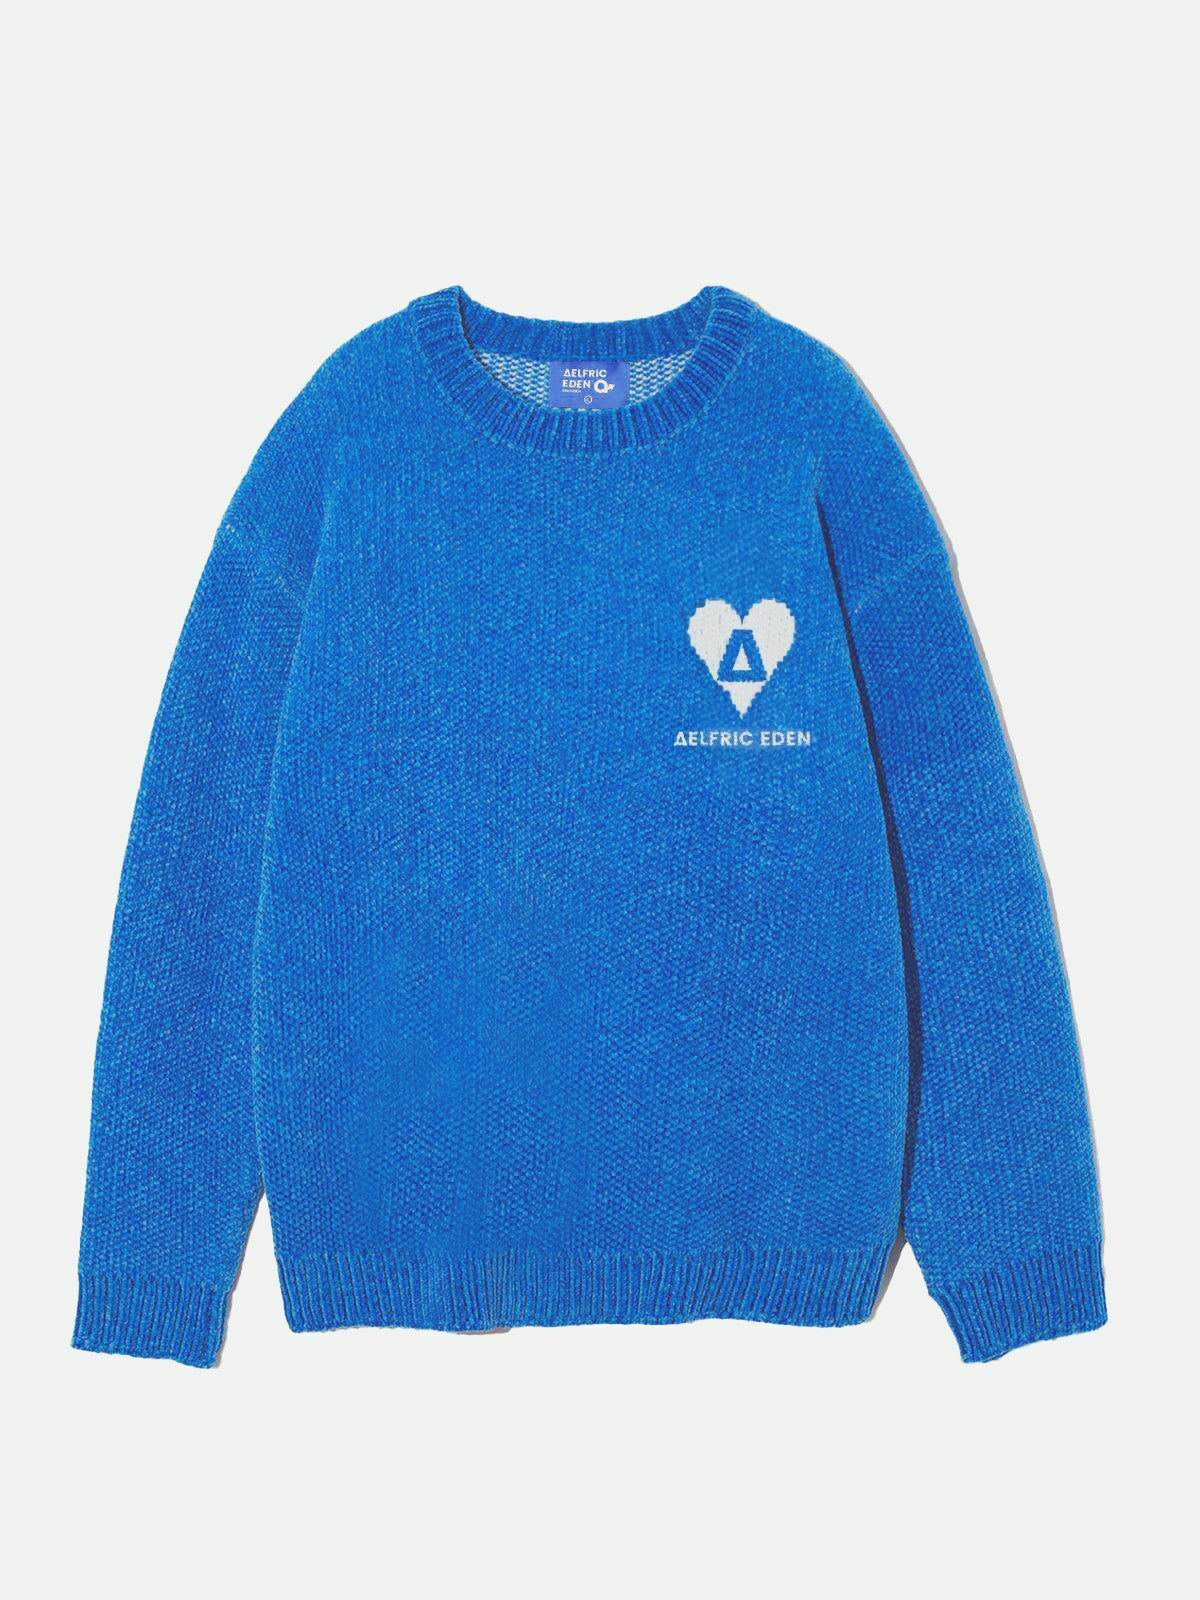 chic city of love logo sweater   urban & trendy design 7156